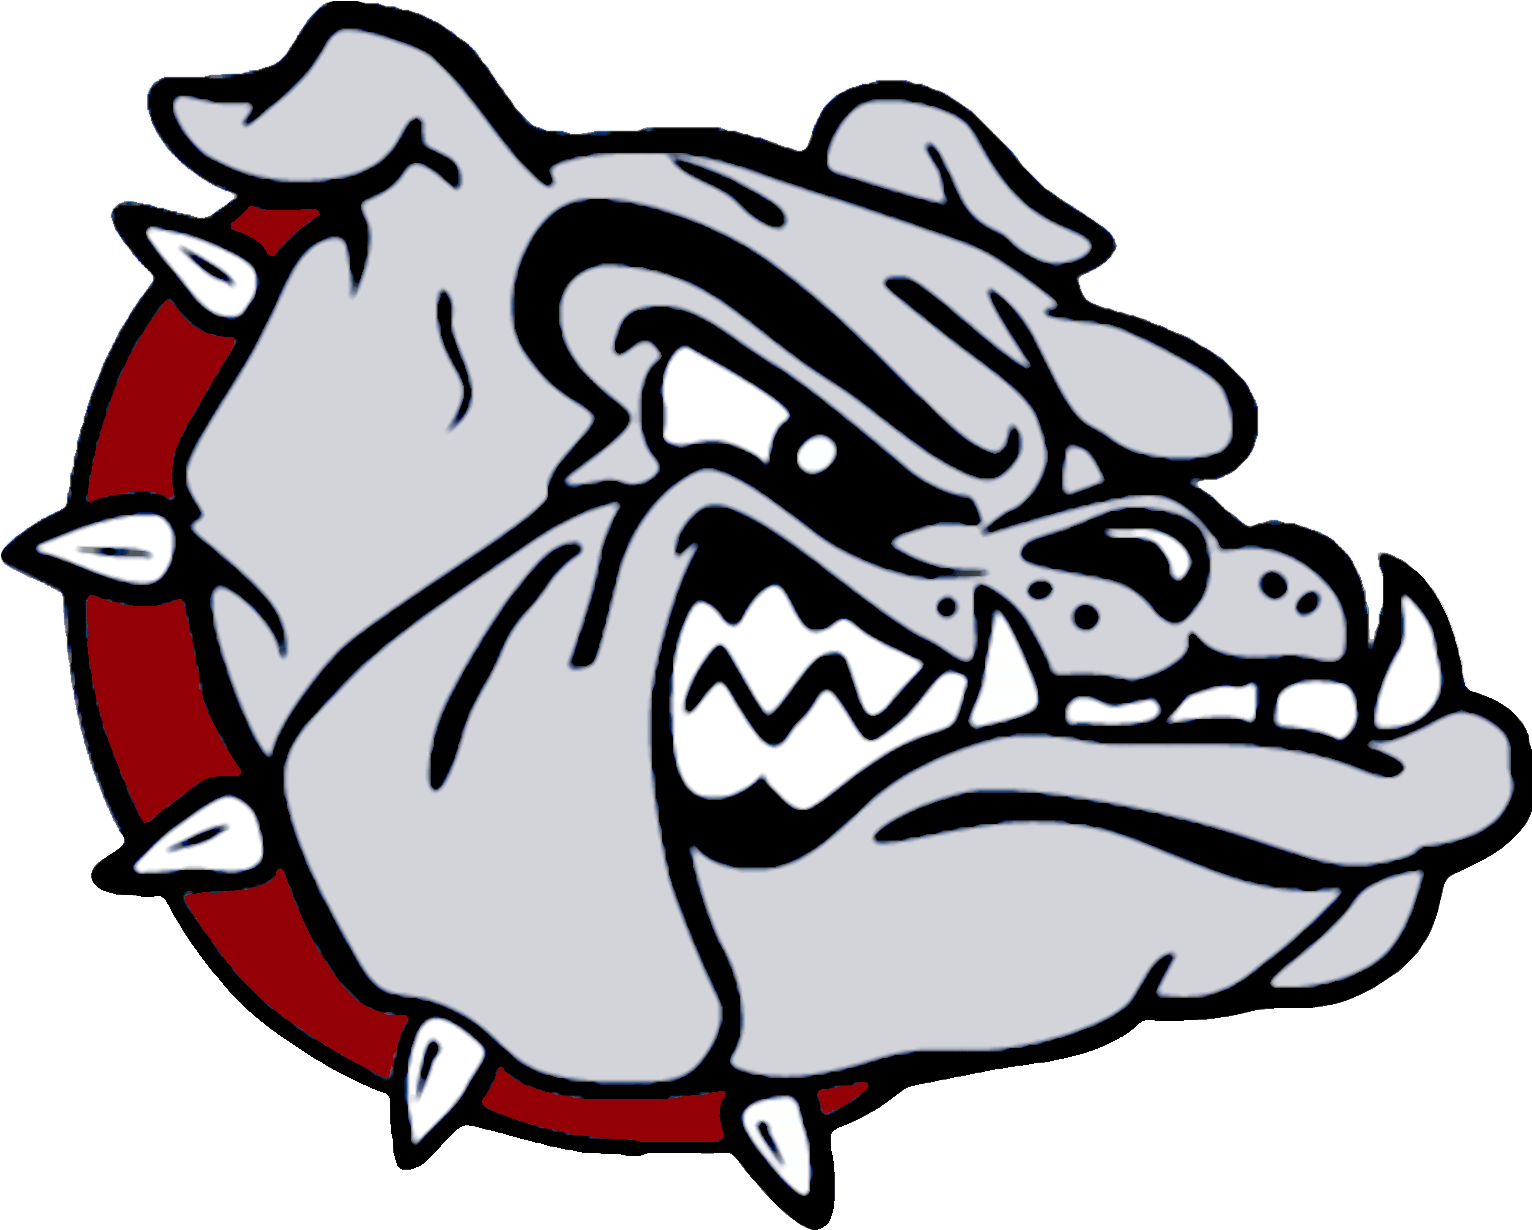 Gonzaga Bulldogs (1631x1330)